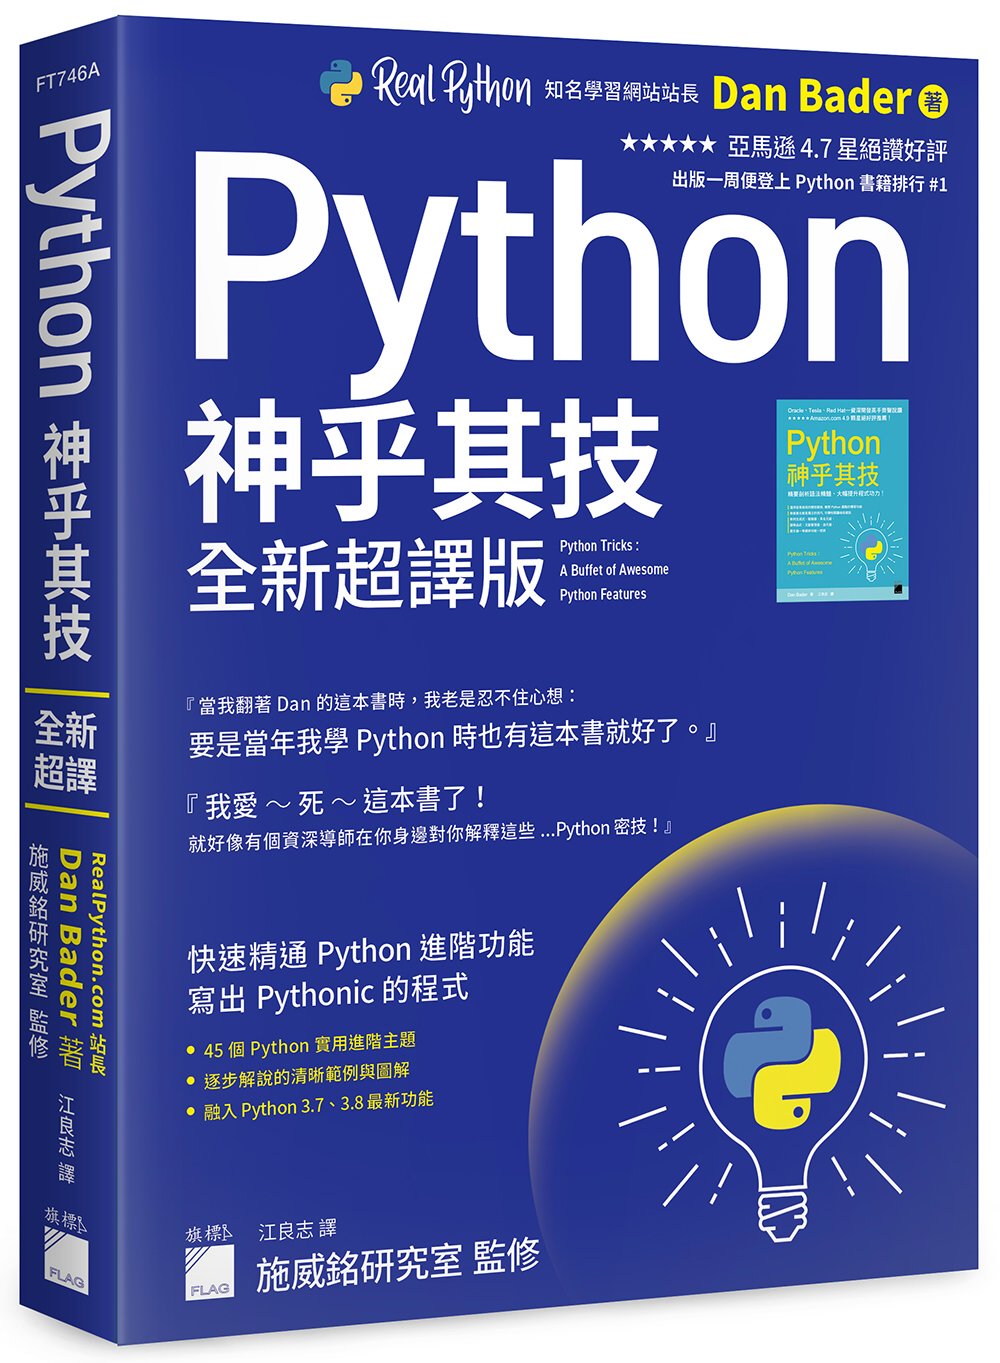 Python 神乎其技 全新超譯版：快速精通 Python 進階功能, 寫出 Pythonic 的程式